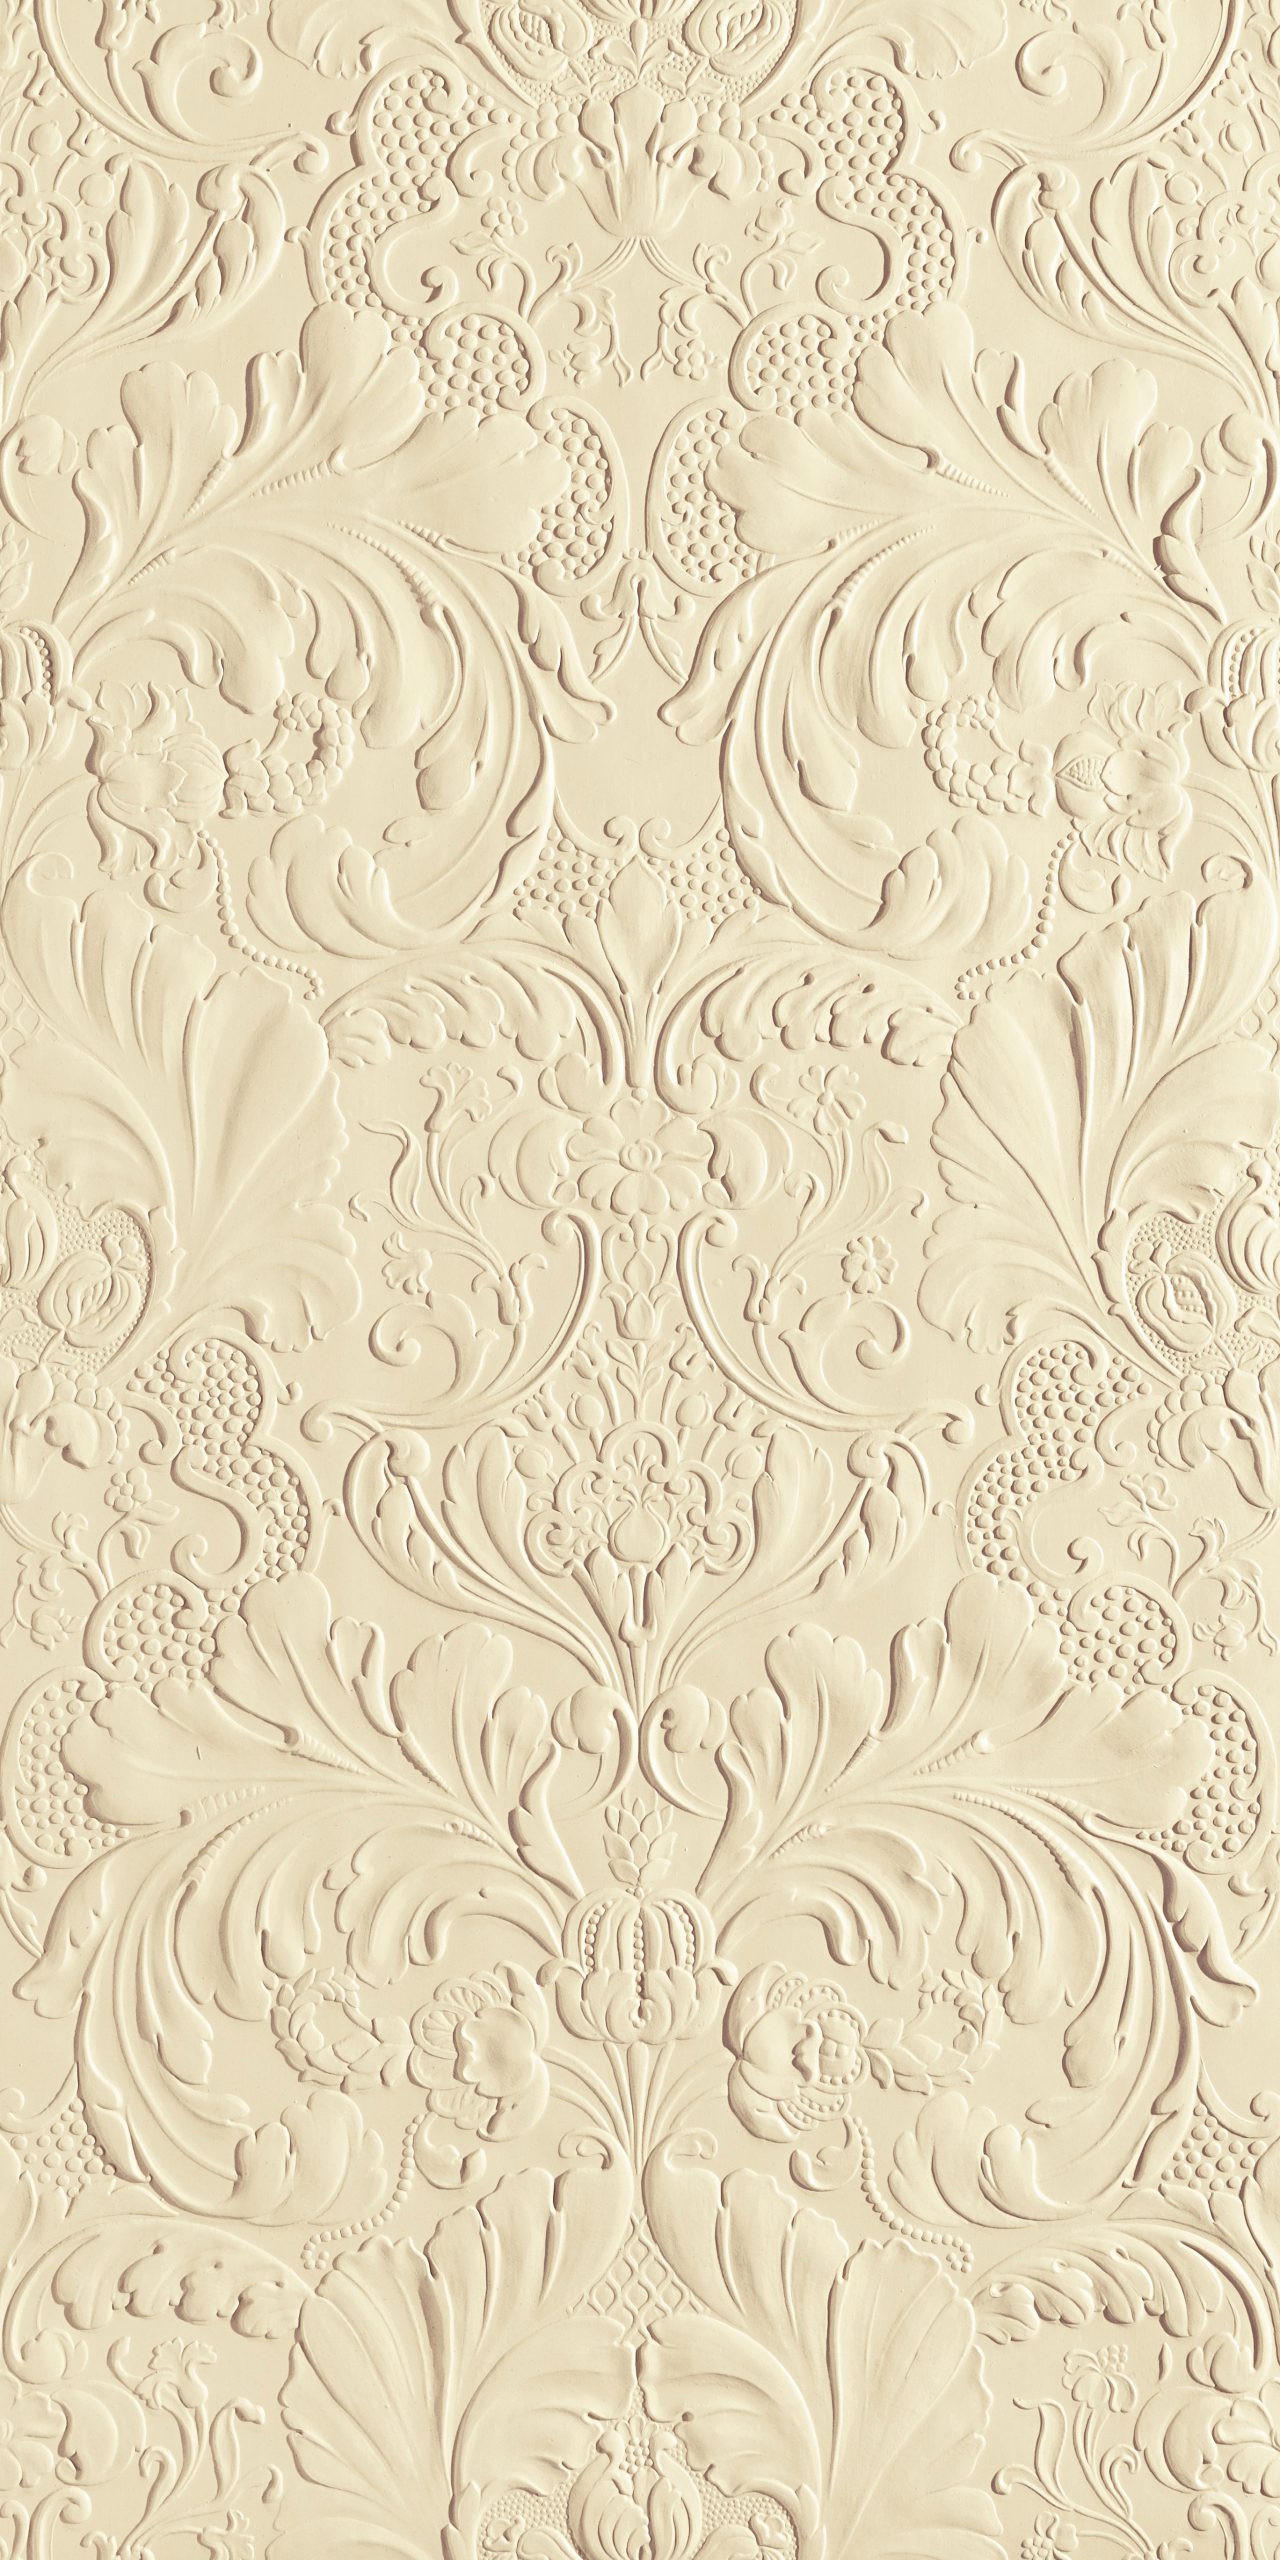 Renaissance Design Wallpaper - KoLPaPer - Awesome Free HD Wallpapers